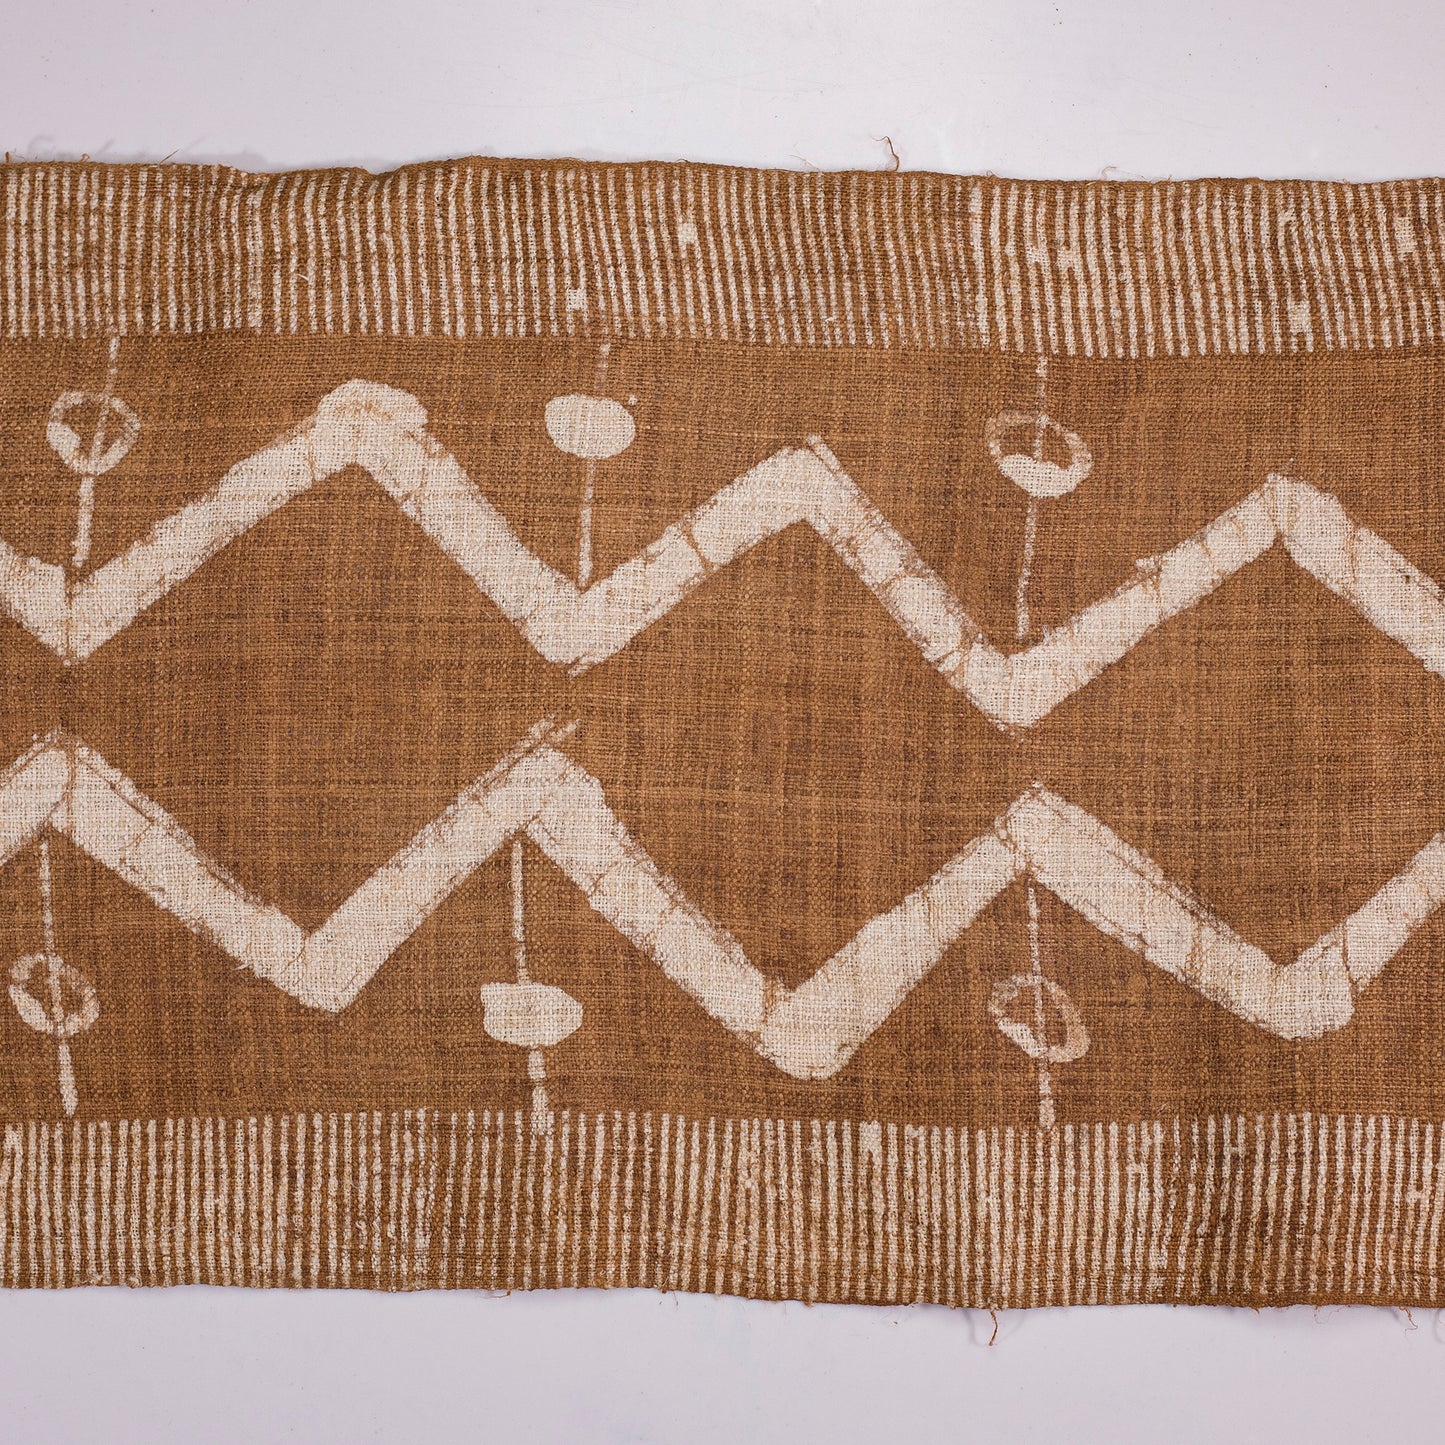 Handwoven hemp fabric, BROWN dyeing yam, H'mong rhombus pattern